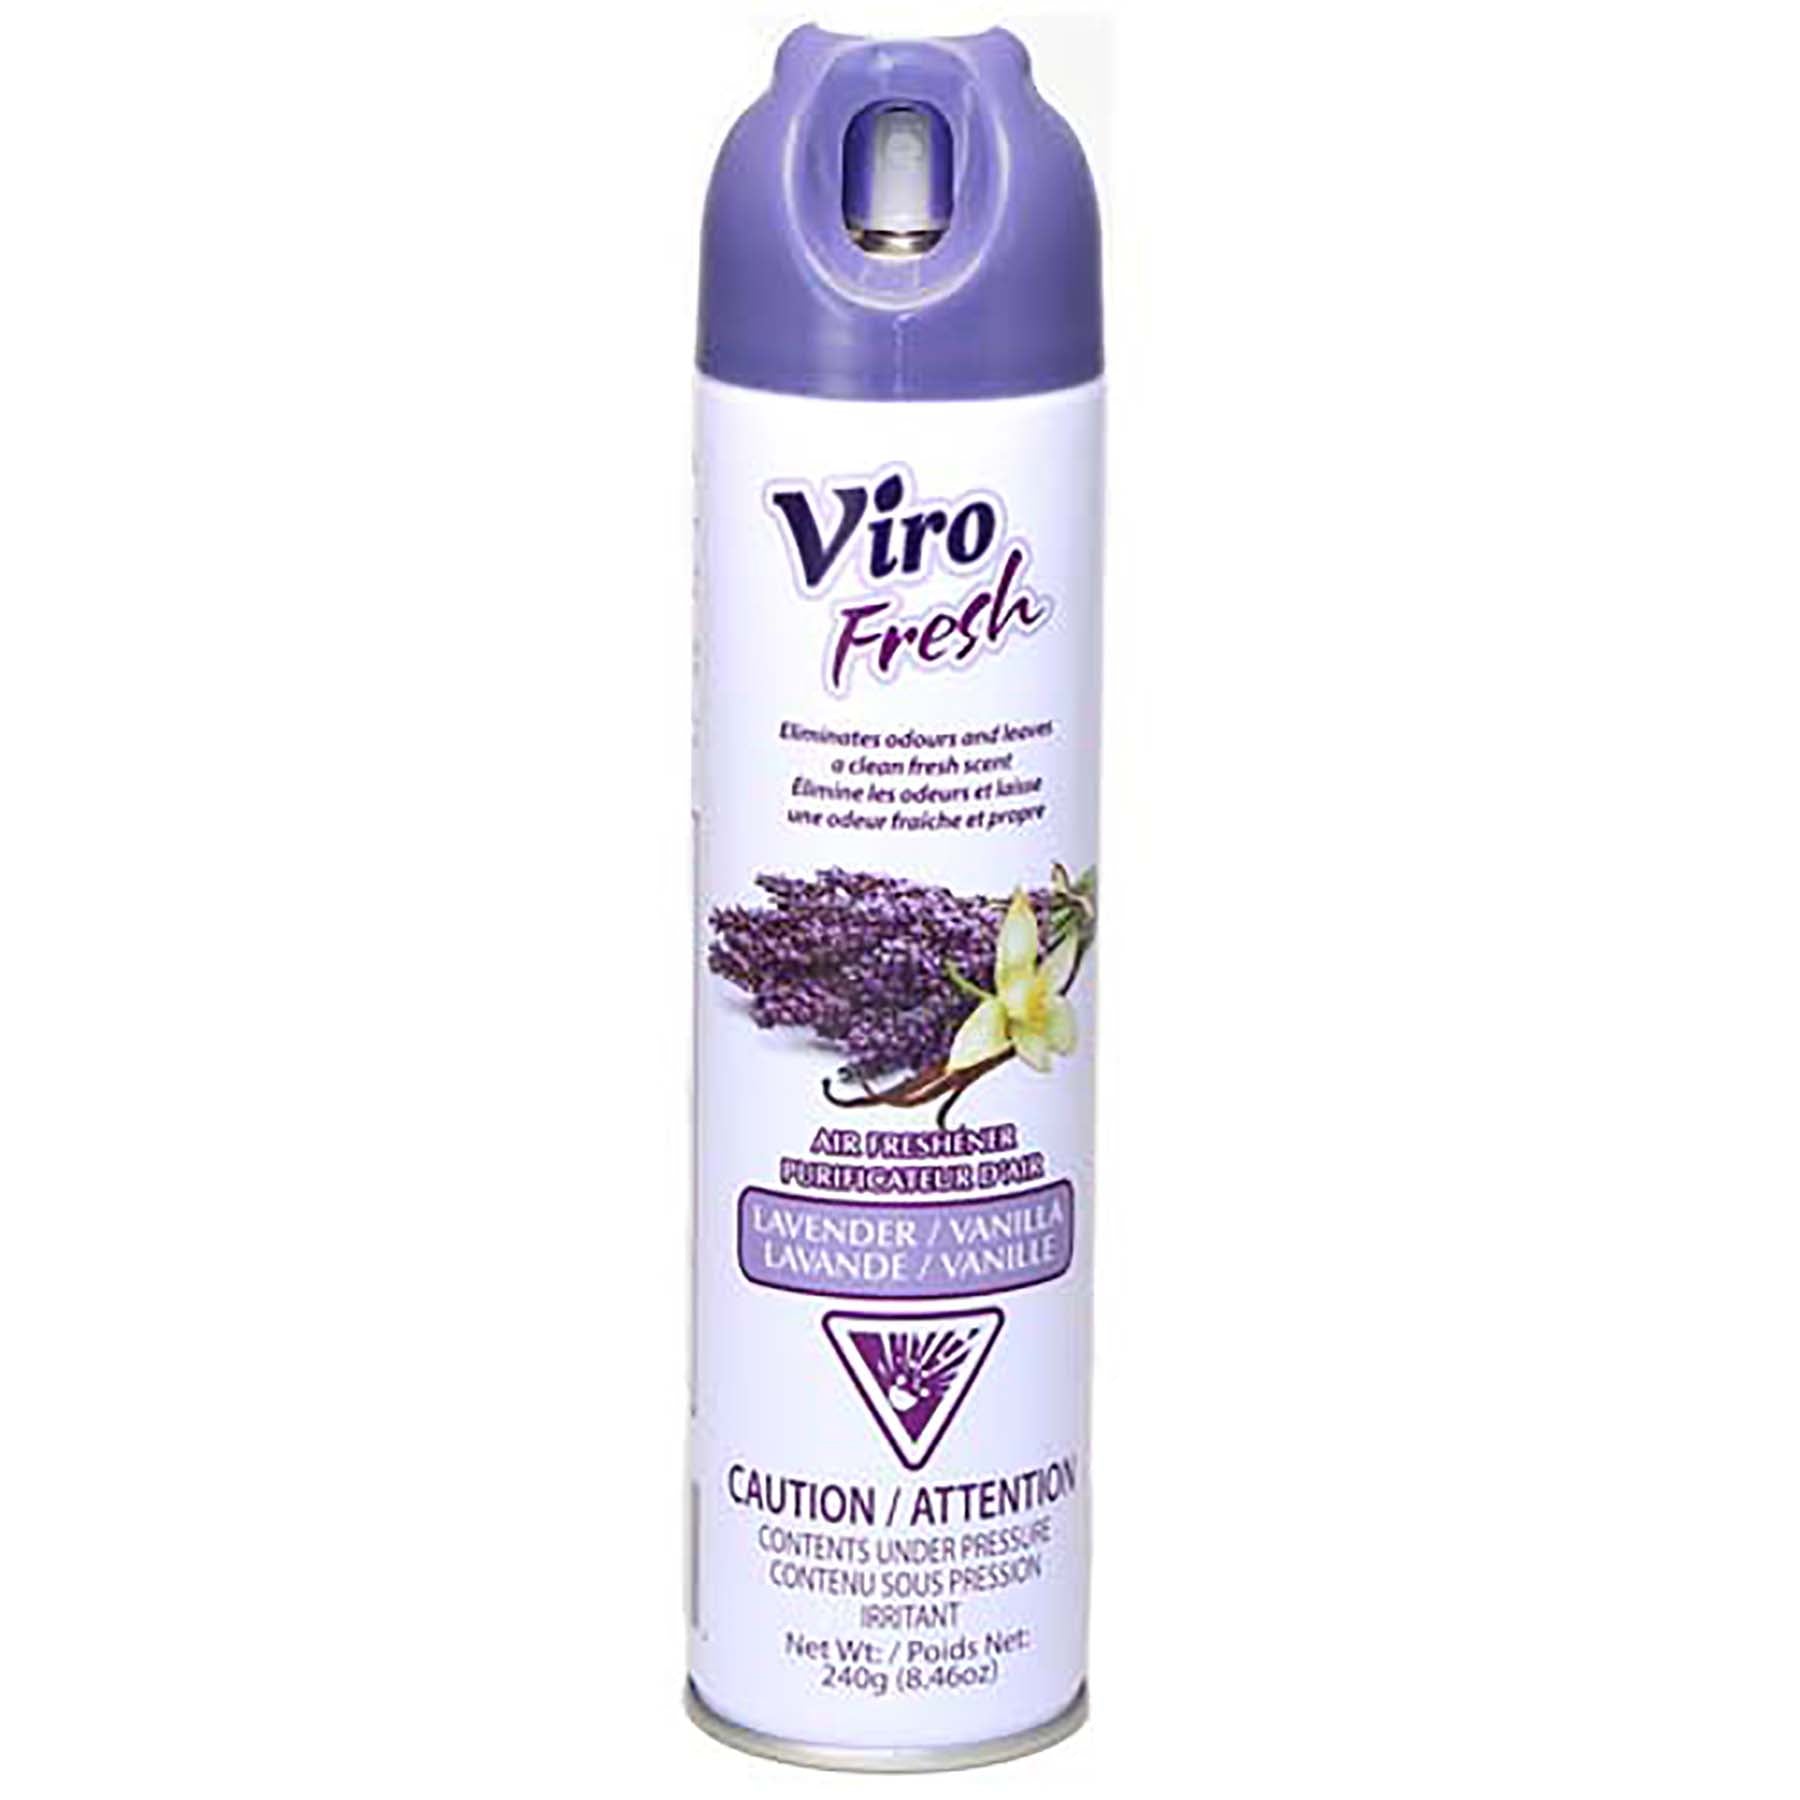 Viro Fresh Air Freshener Lavender Vanilla 8.46oz